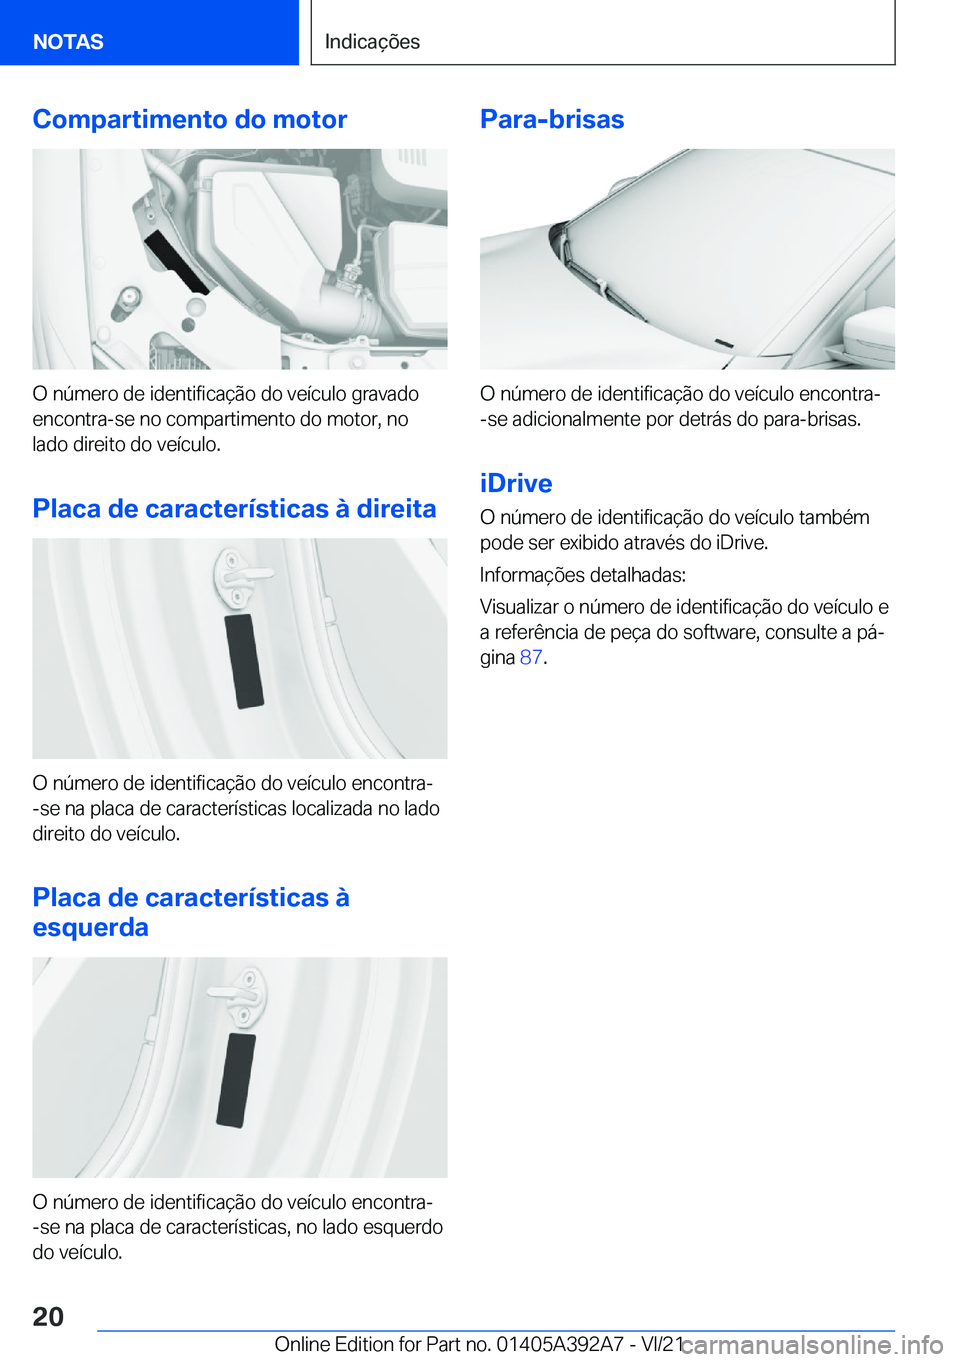 BMW 4 SERIES 2022  Manual do condutor (in Portuguese) �C�o�m�p�a�r�t�i�m�e�n�t�o��d�o��m�o�t�o�r
�O��n�